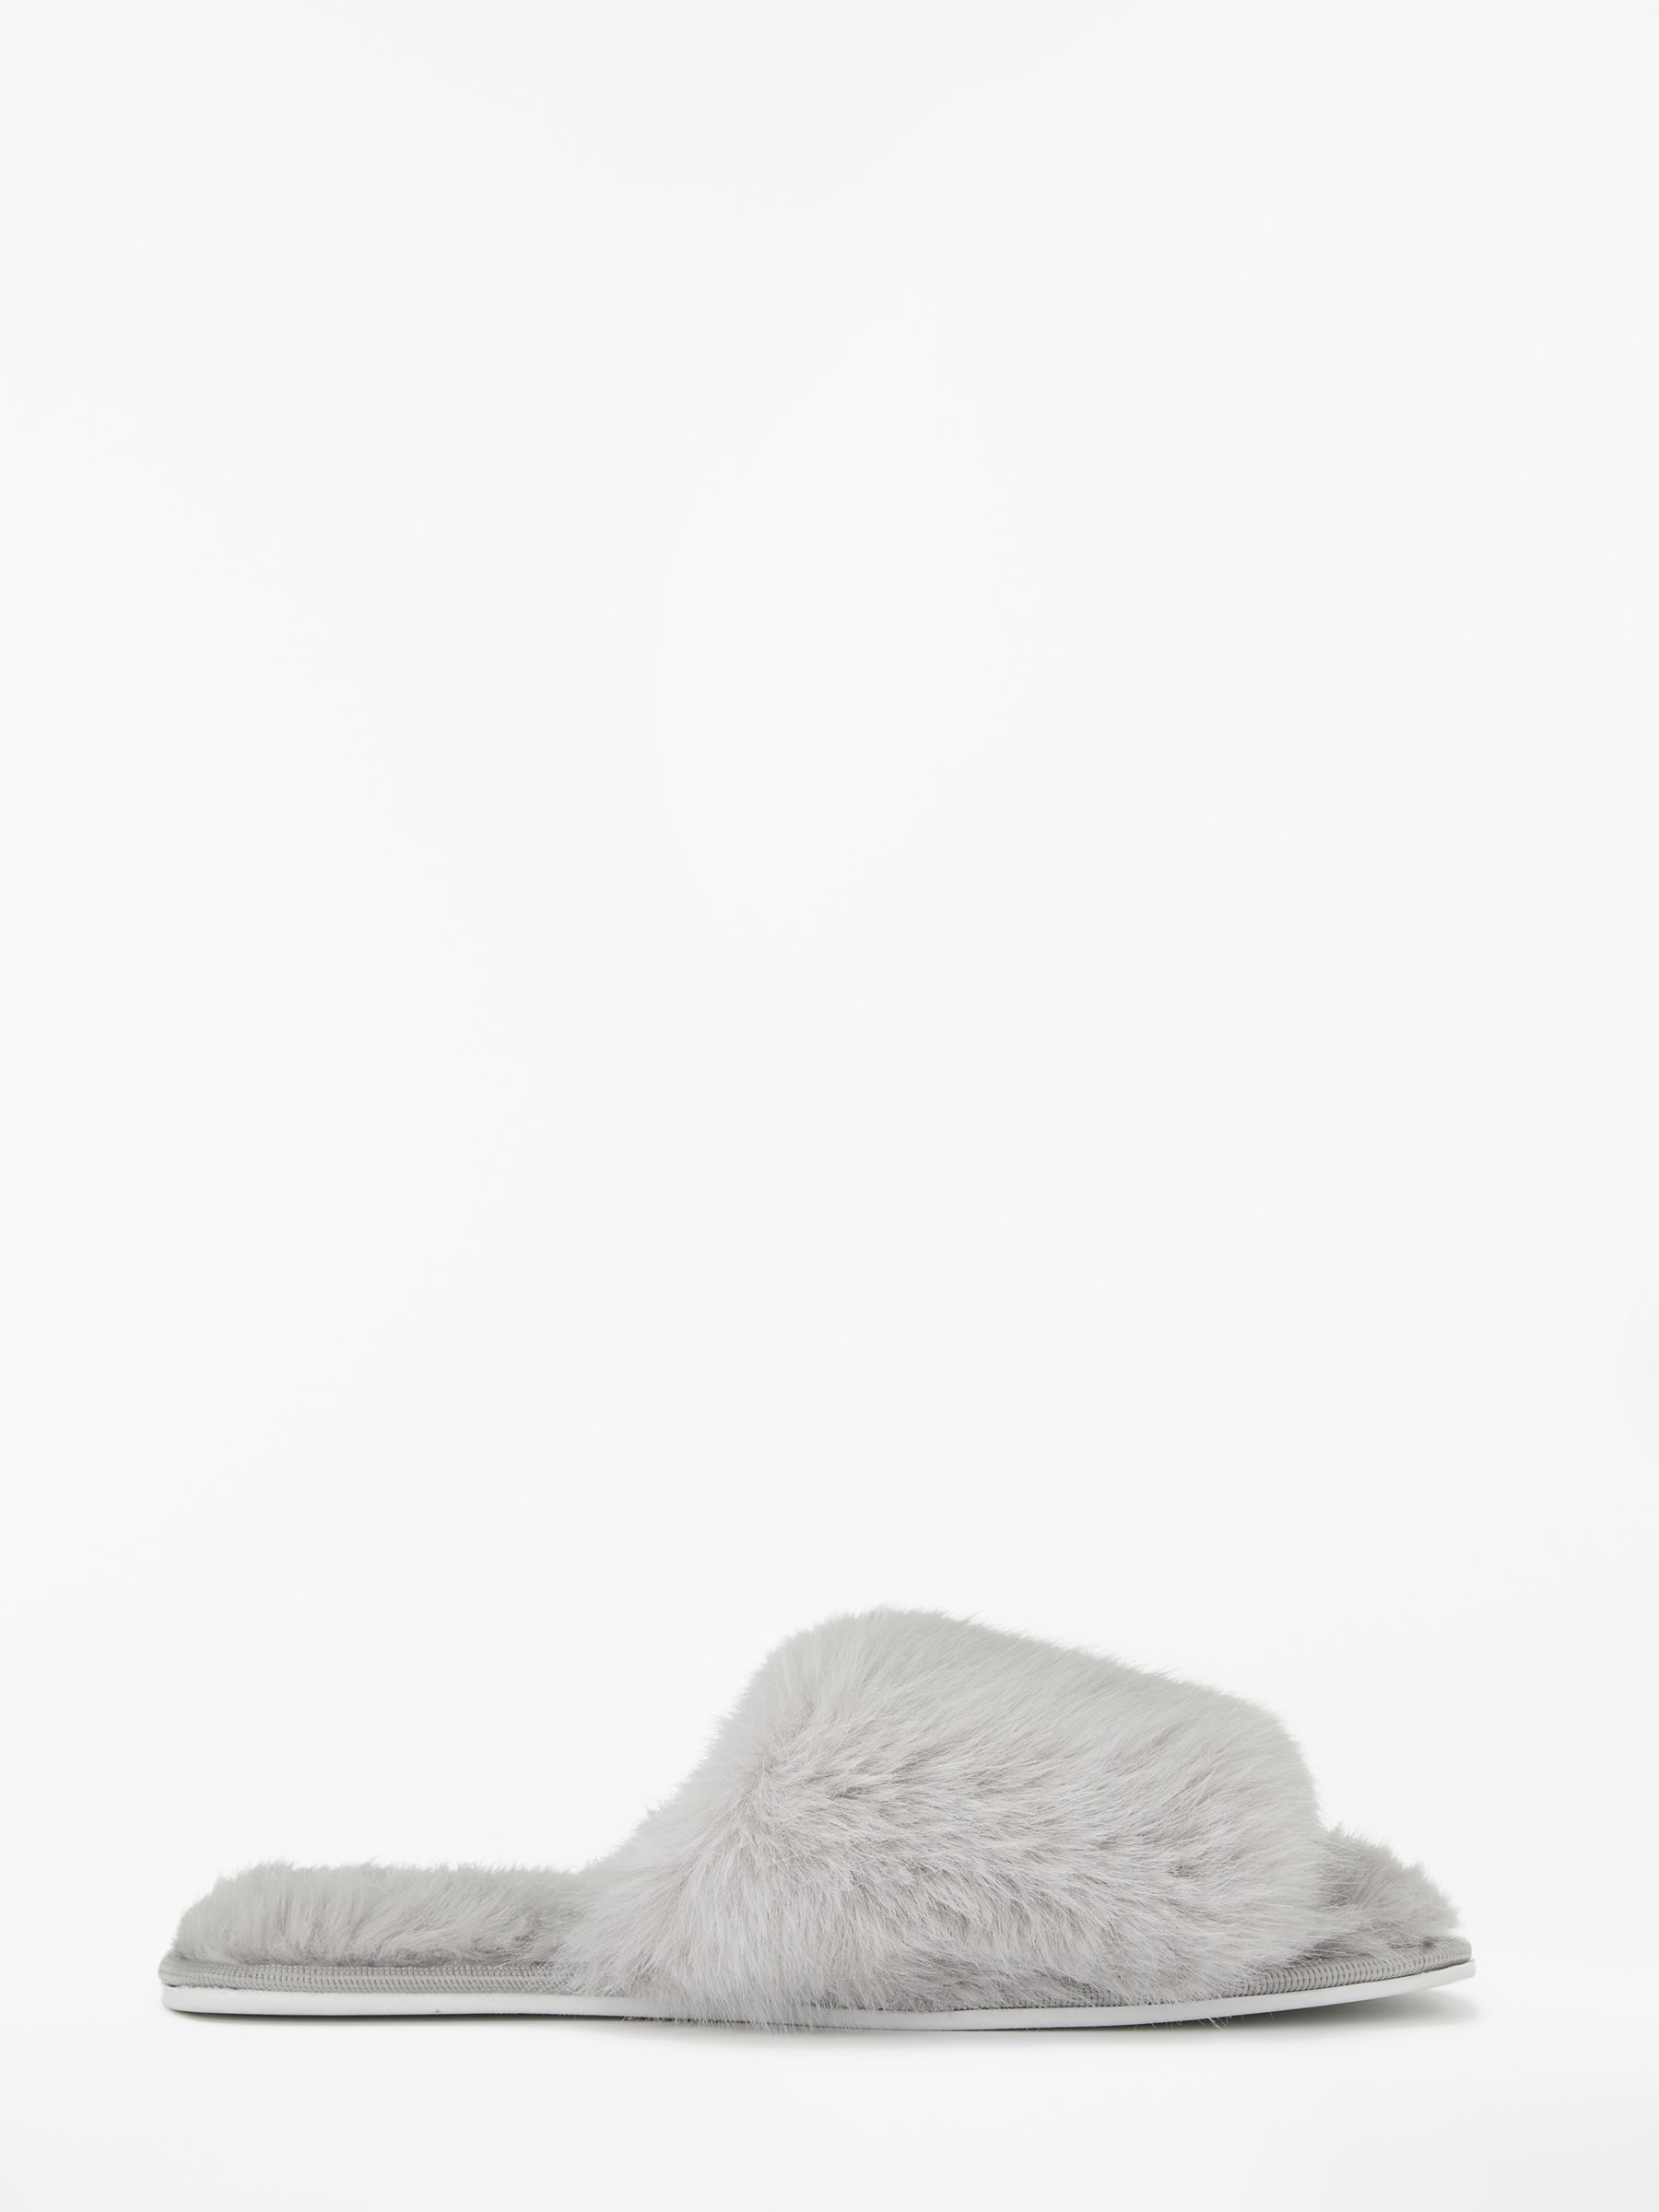 John Lewis & Partners Faux Fur Slider Slippers, Pale Grey